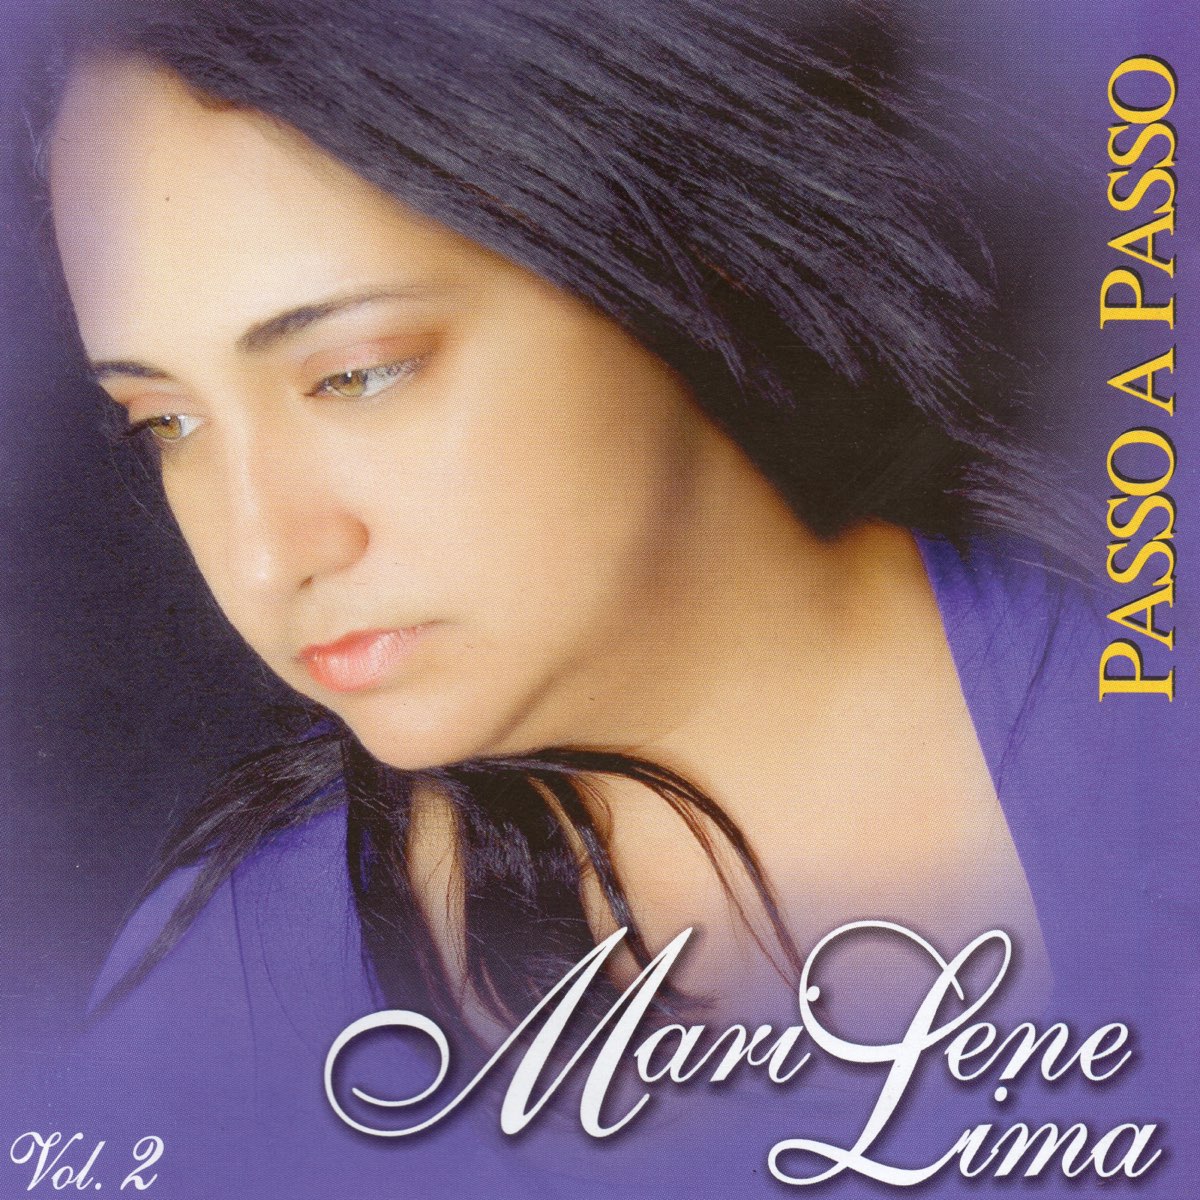 Agora É Minha Vez (Playback) — álbum de Marilene Lima — Apple Music